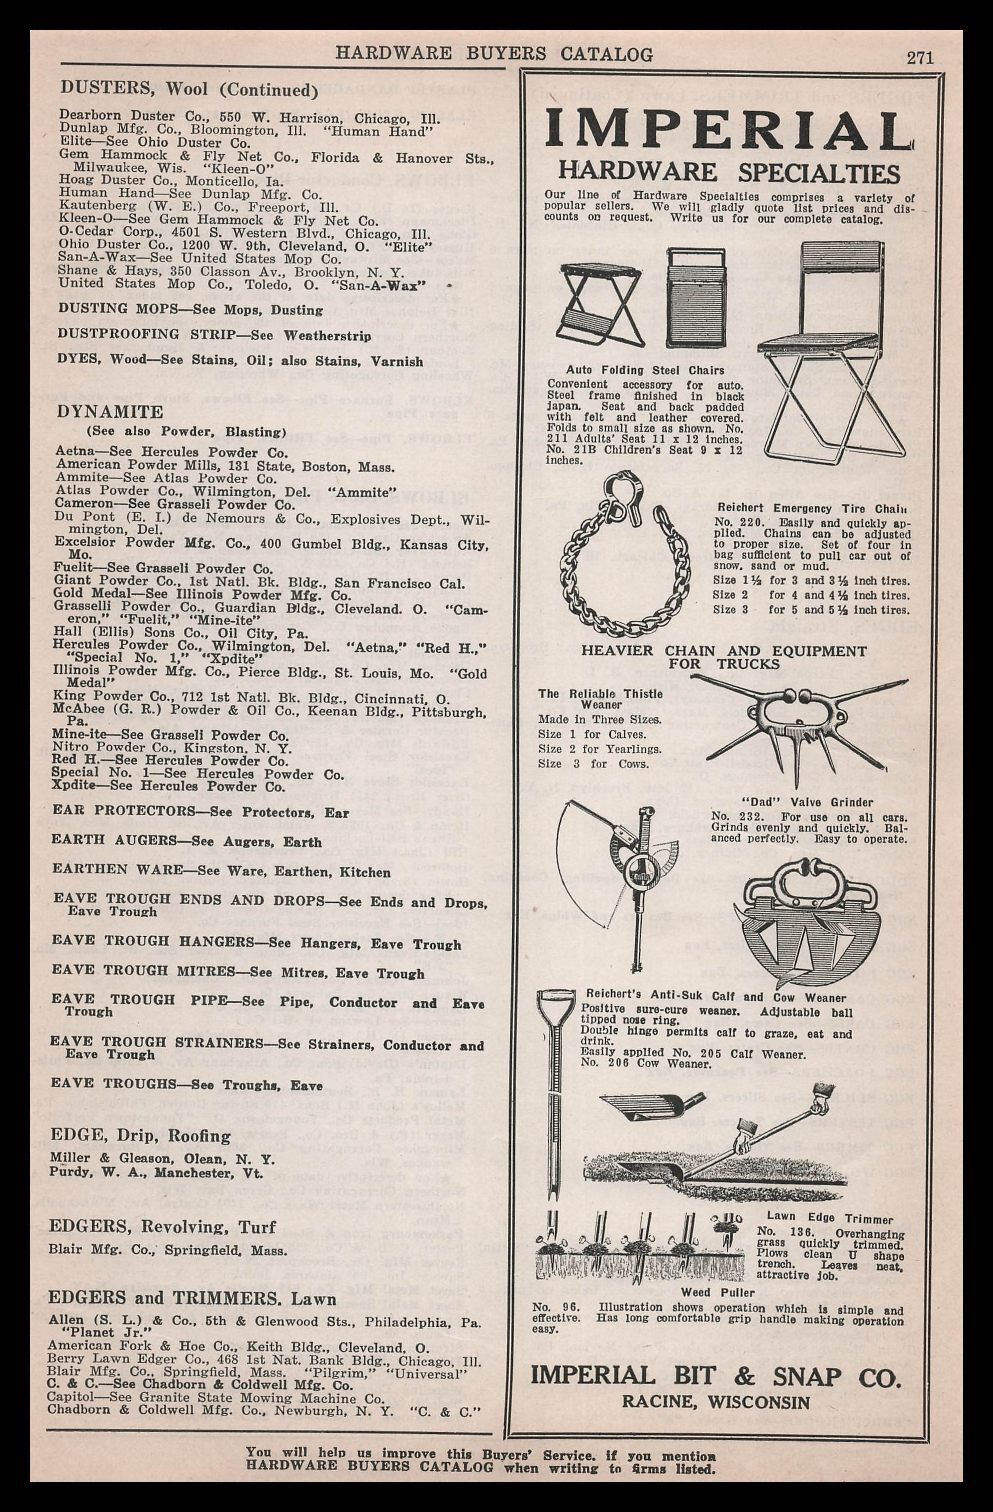 1928 Imperial Bit & Snap Racine Wisconsin Reichert Anti-Suk Calf Weaner Print Ad